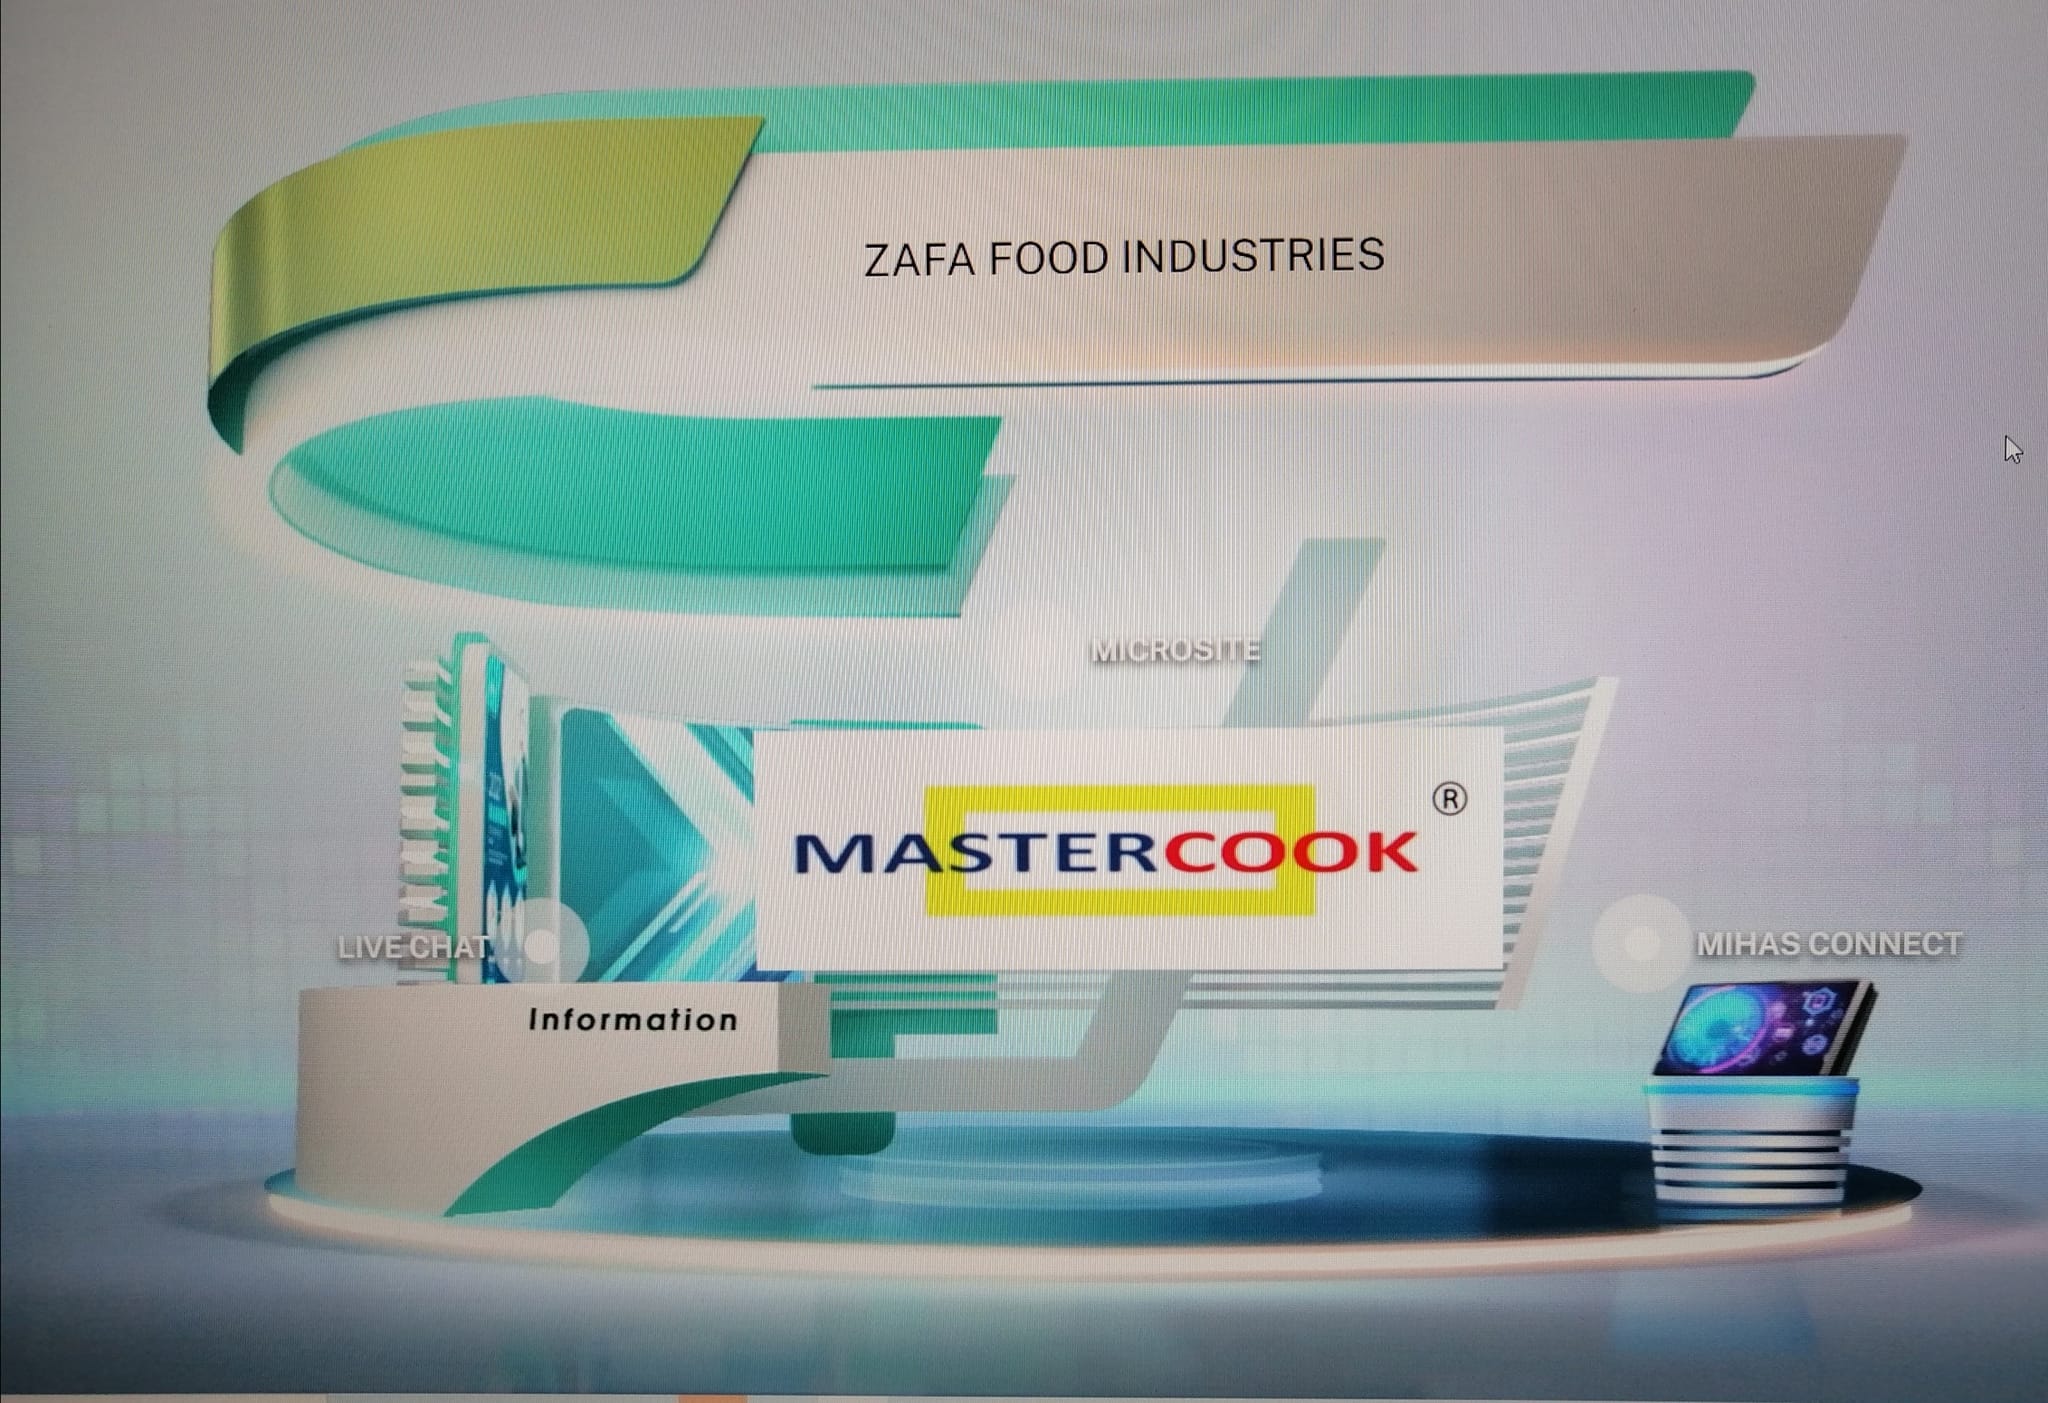 Zafa Foods Industries Sdn Bhd